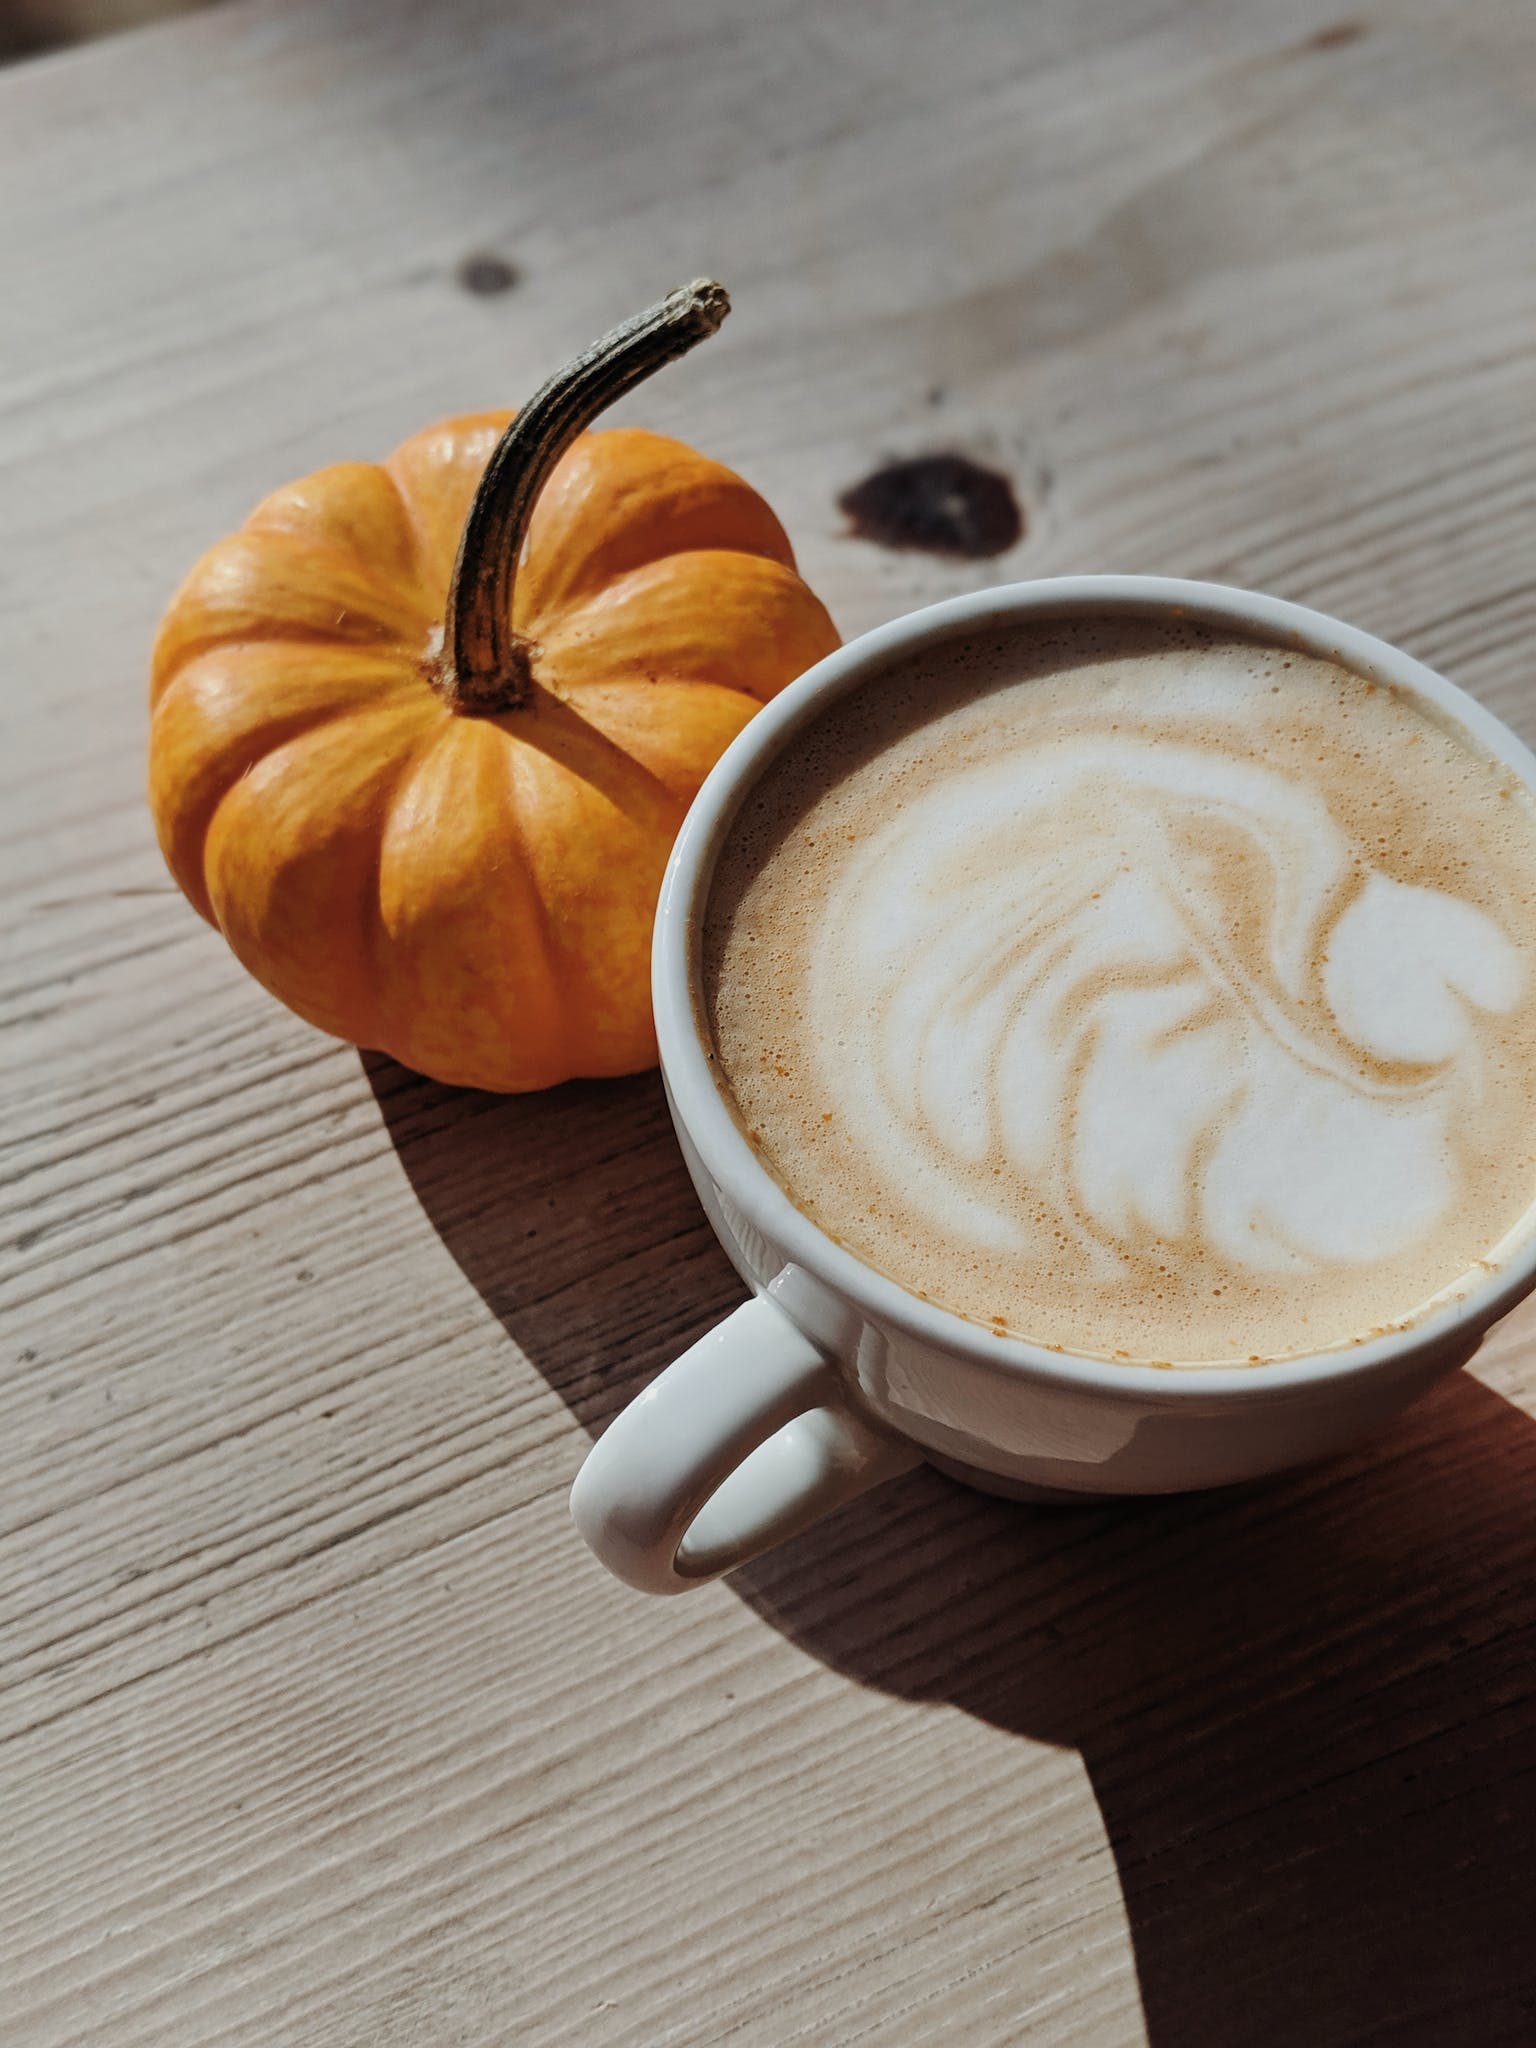 A pumpkin and pumpkin spice latte representative of fall seasonal eating.